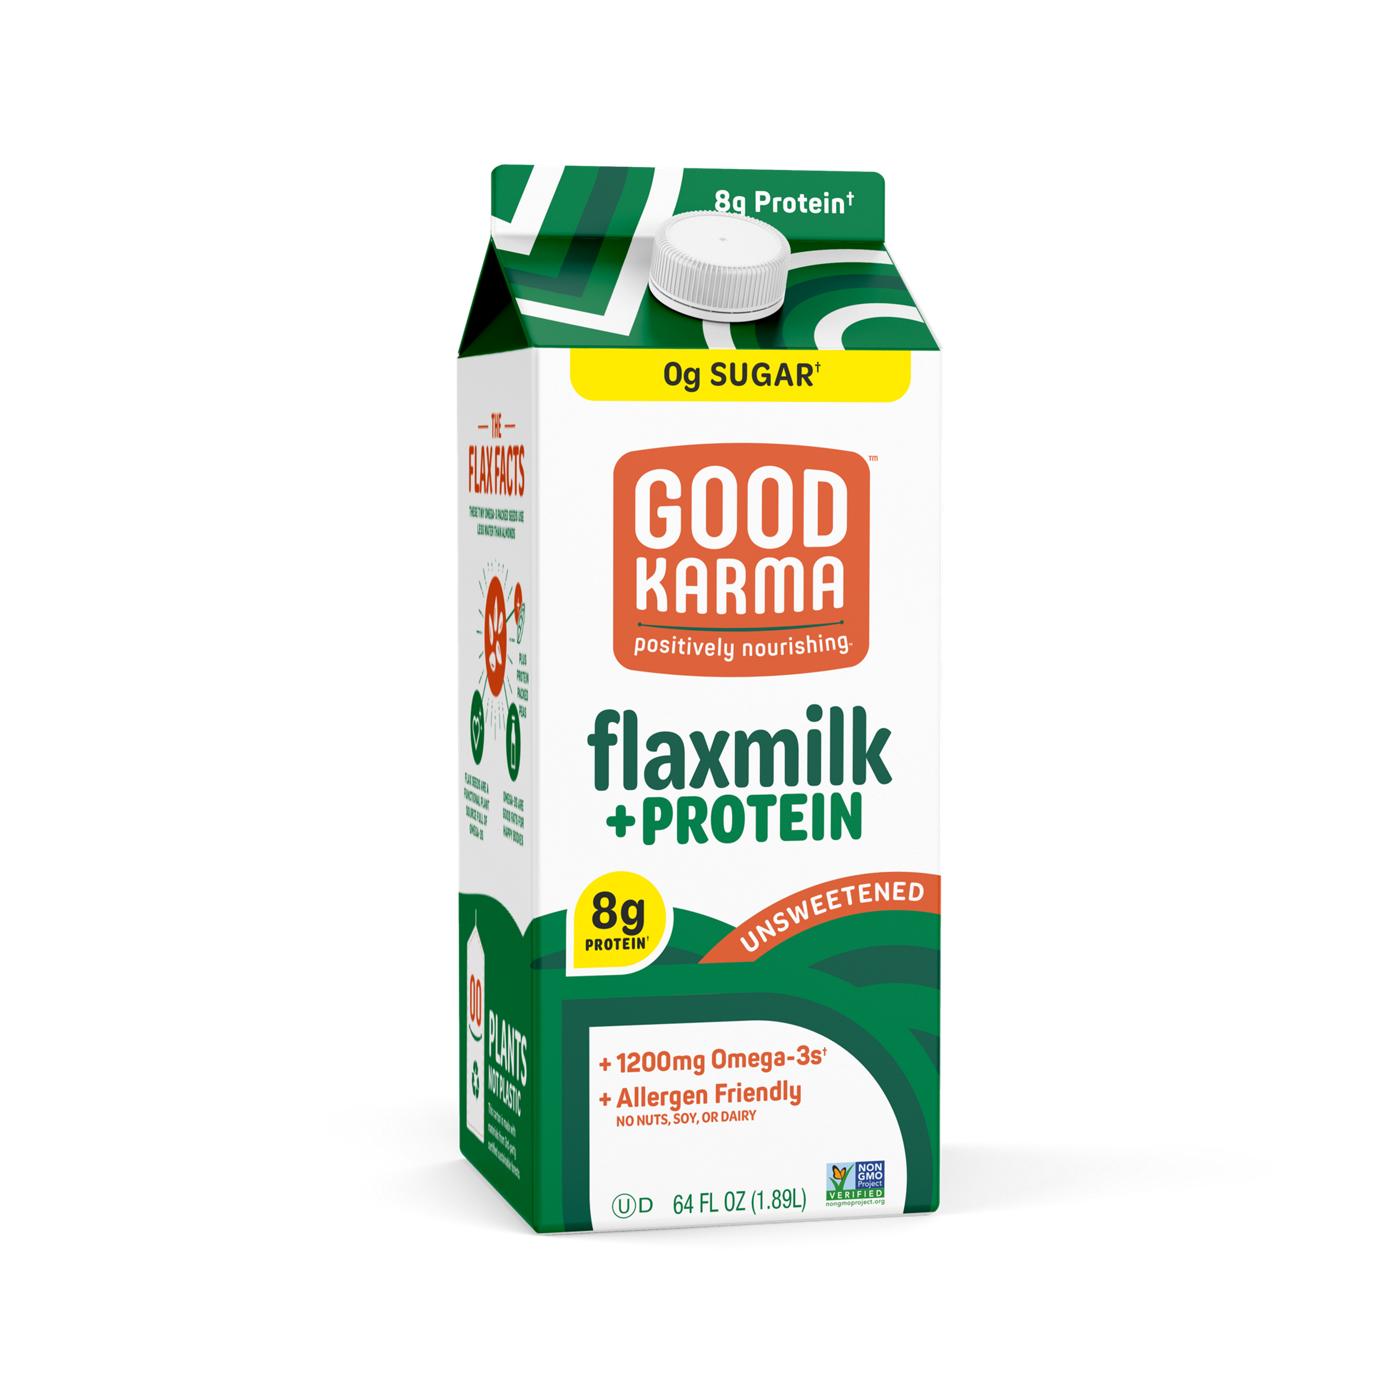 Good Karma Unsweetened + Protein Flax Milk; image 6 of 7